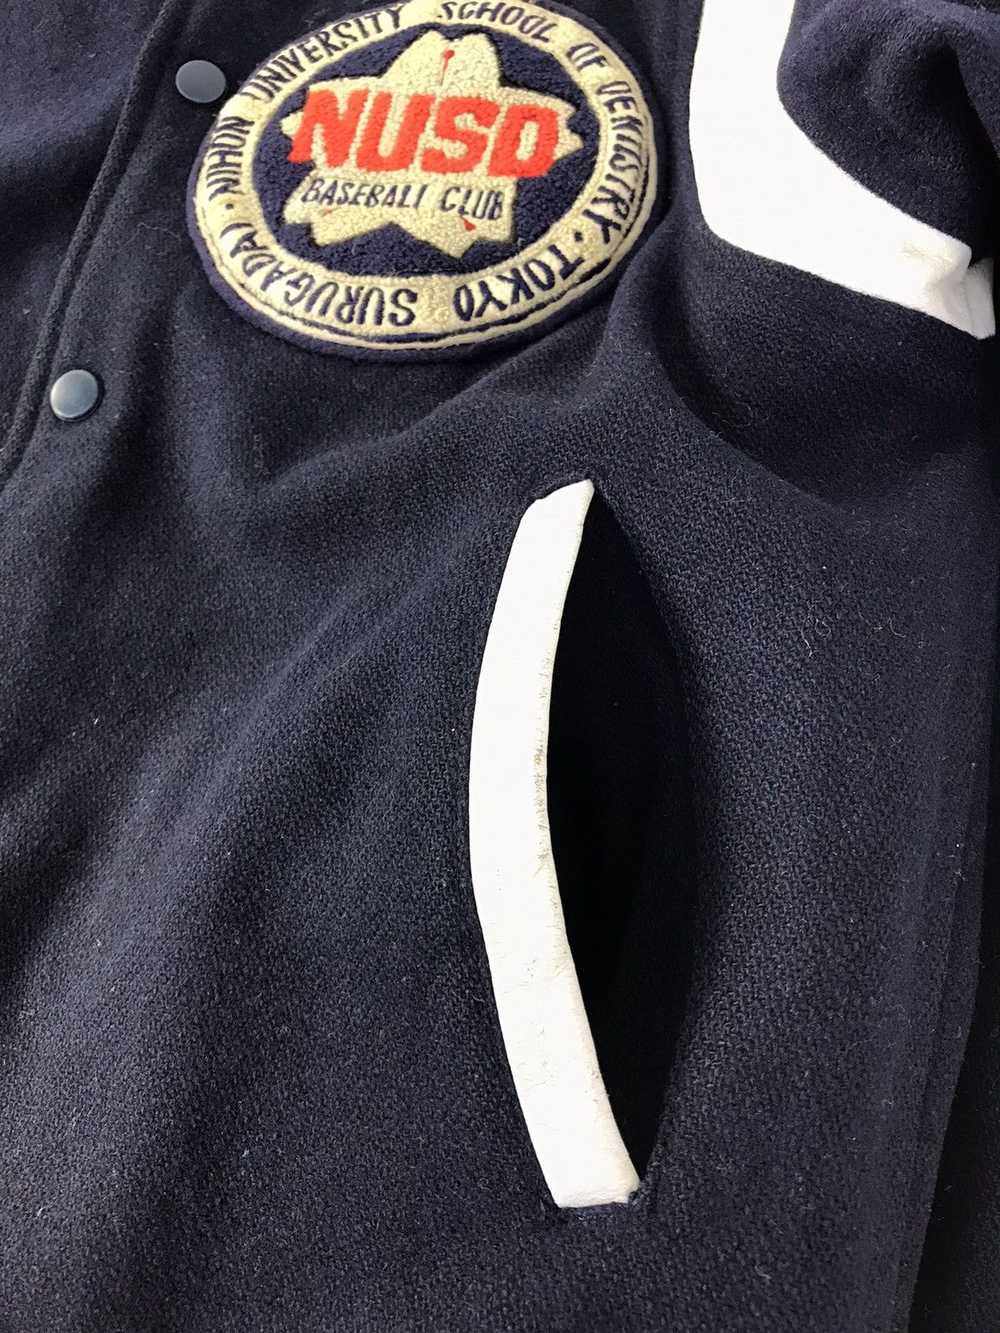 Mizuno × Varsity Jacket × Vintage Vtg Mizuno Nuso… - image 8